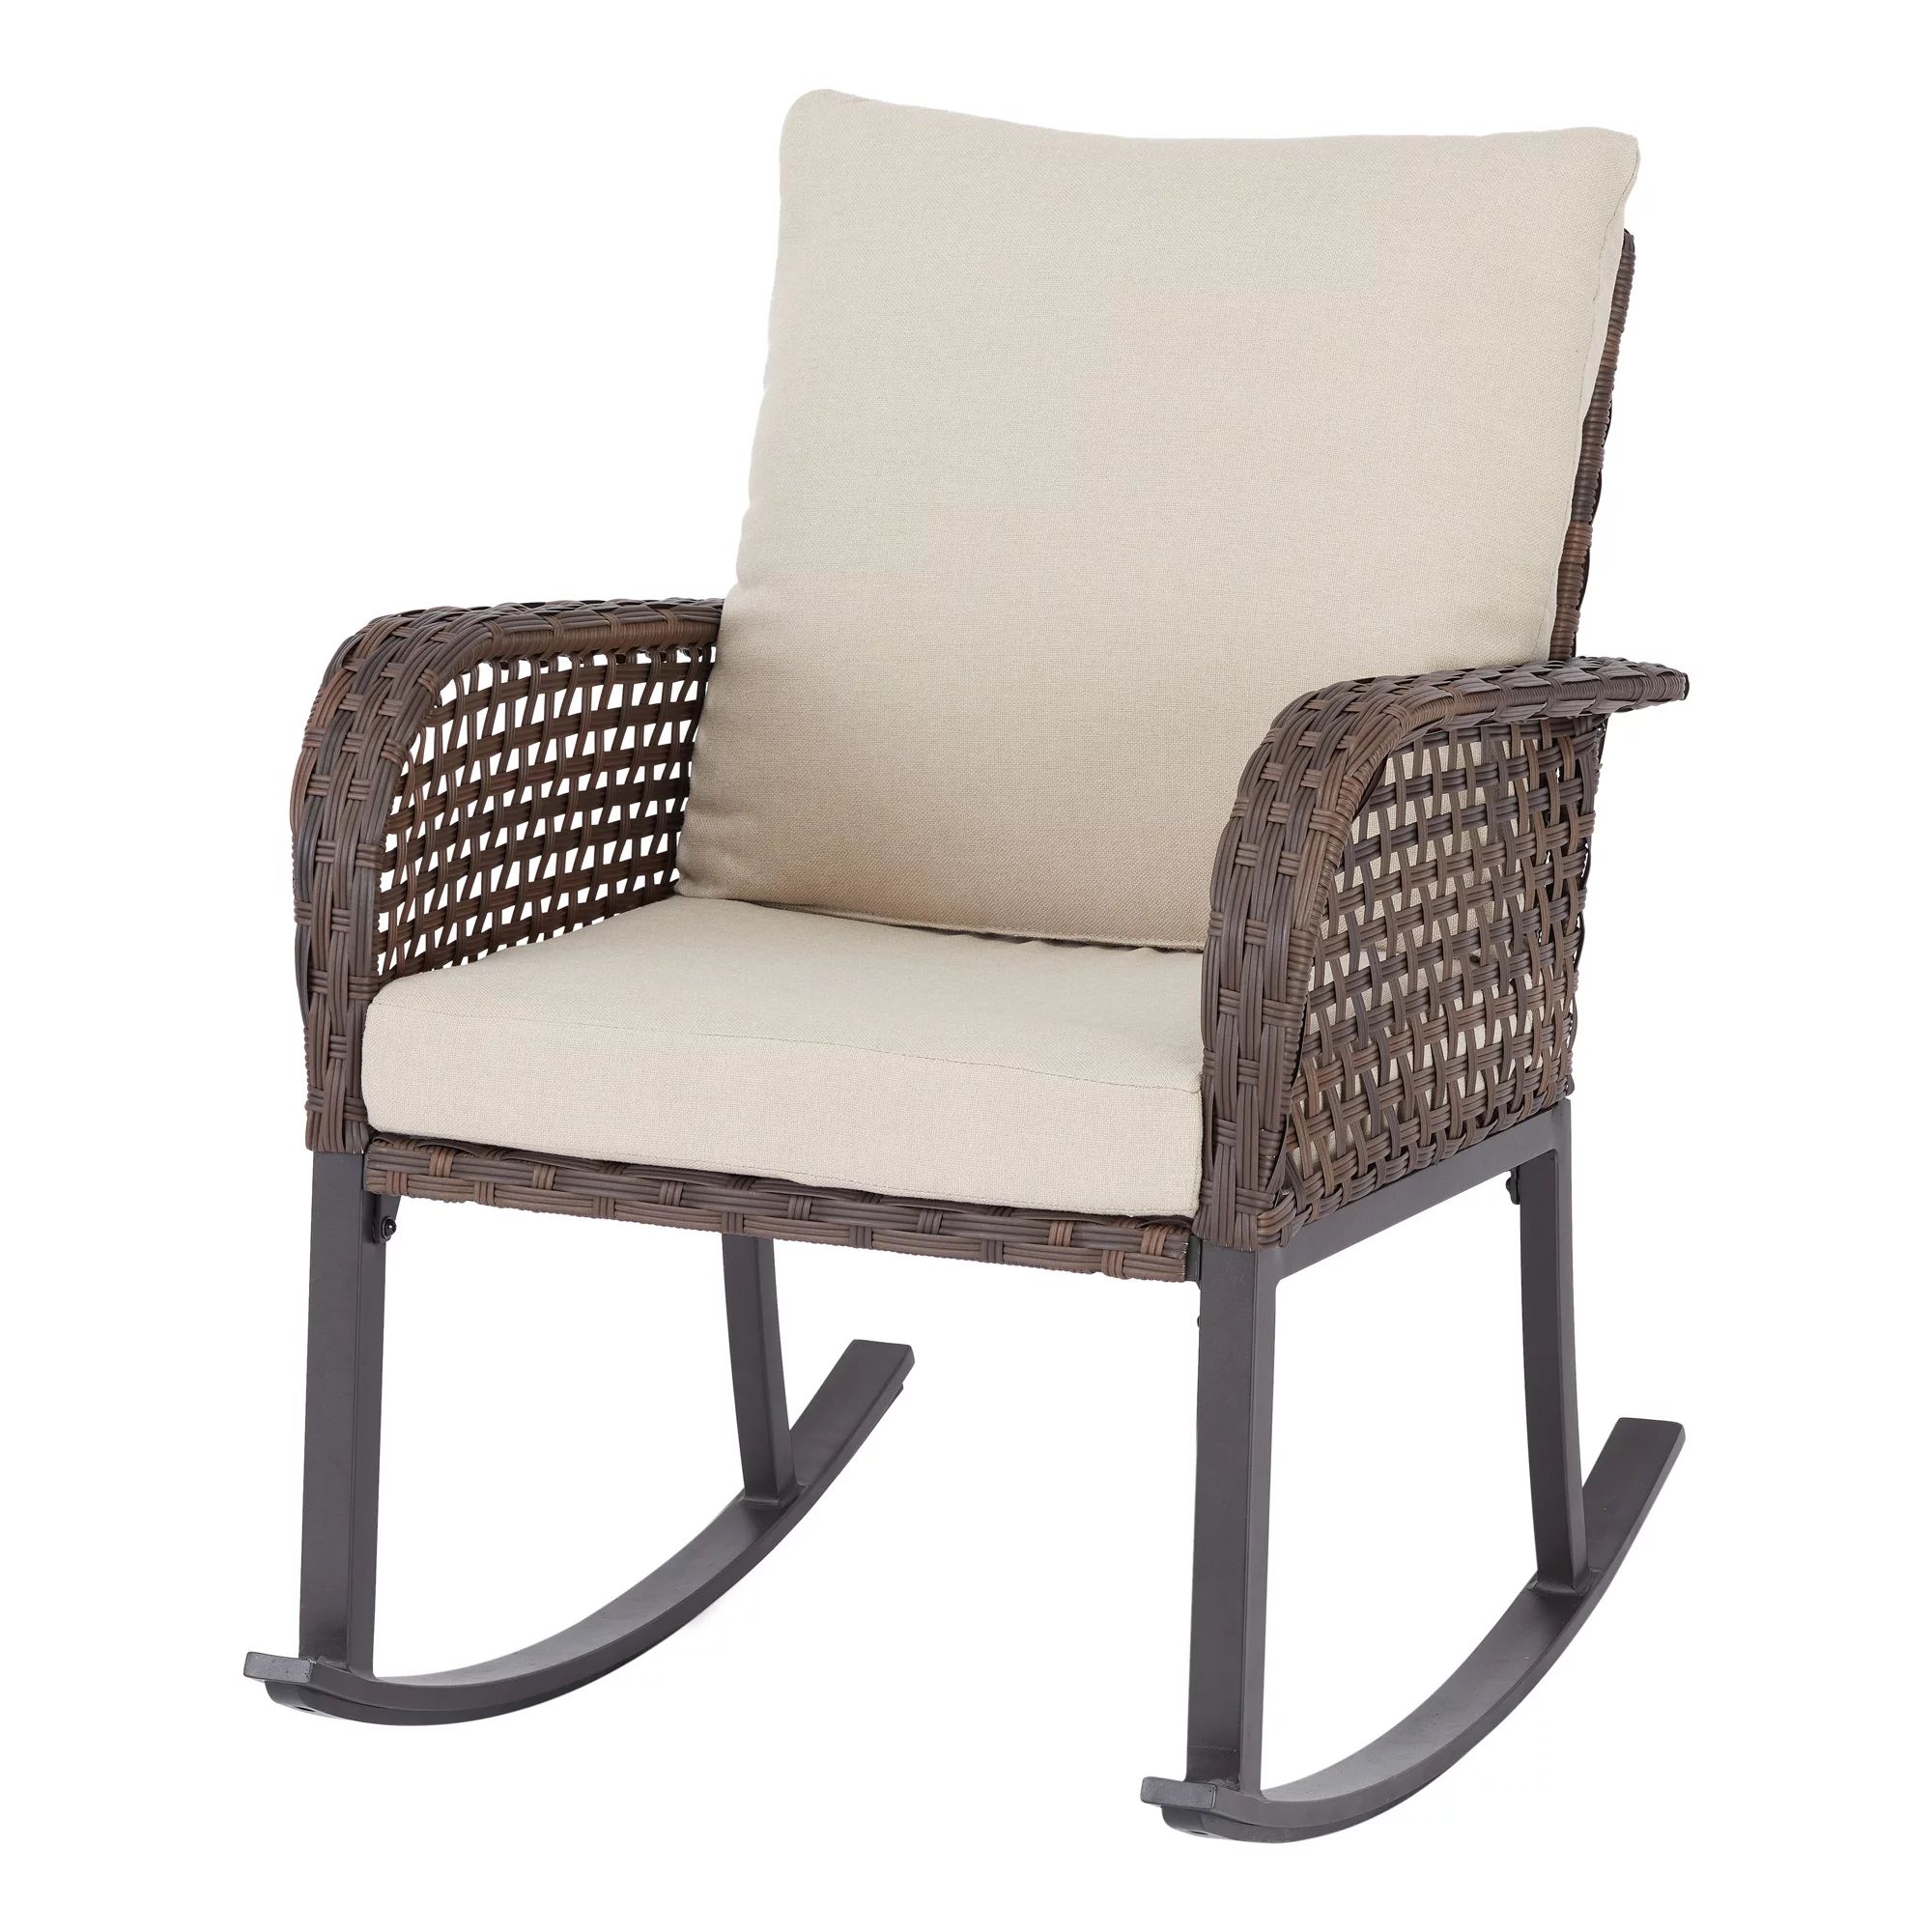 Mainstays Tuscany Ridge Outdoor Dining Height Rocking Chair, Tan | Walmart (US)